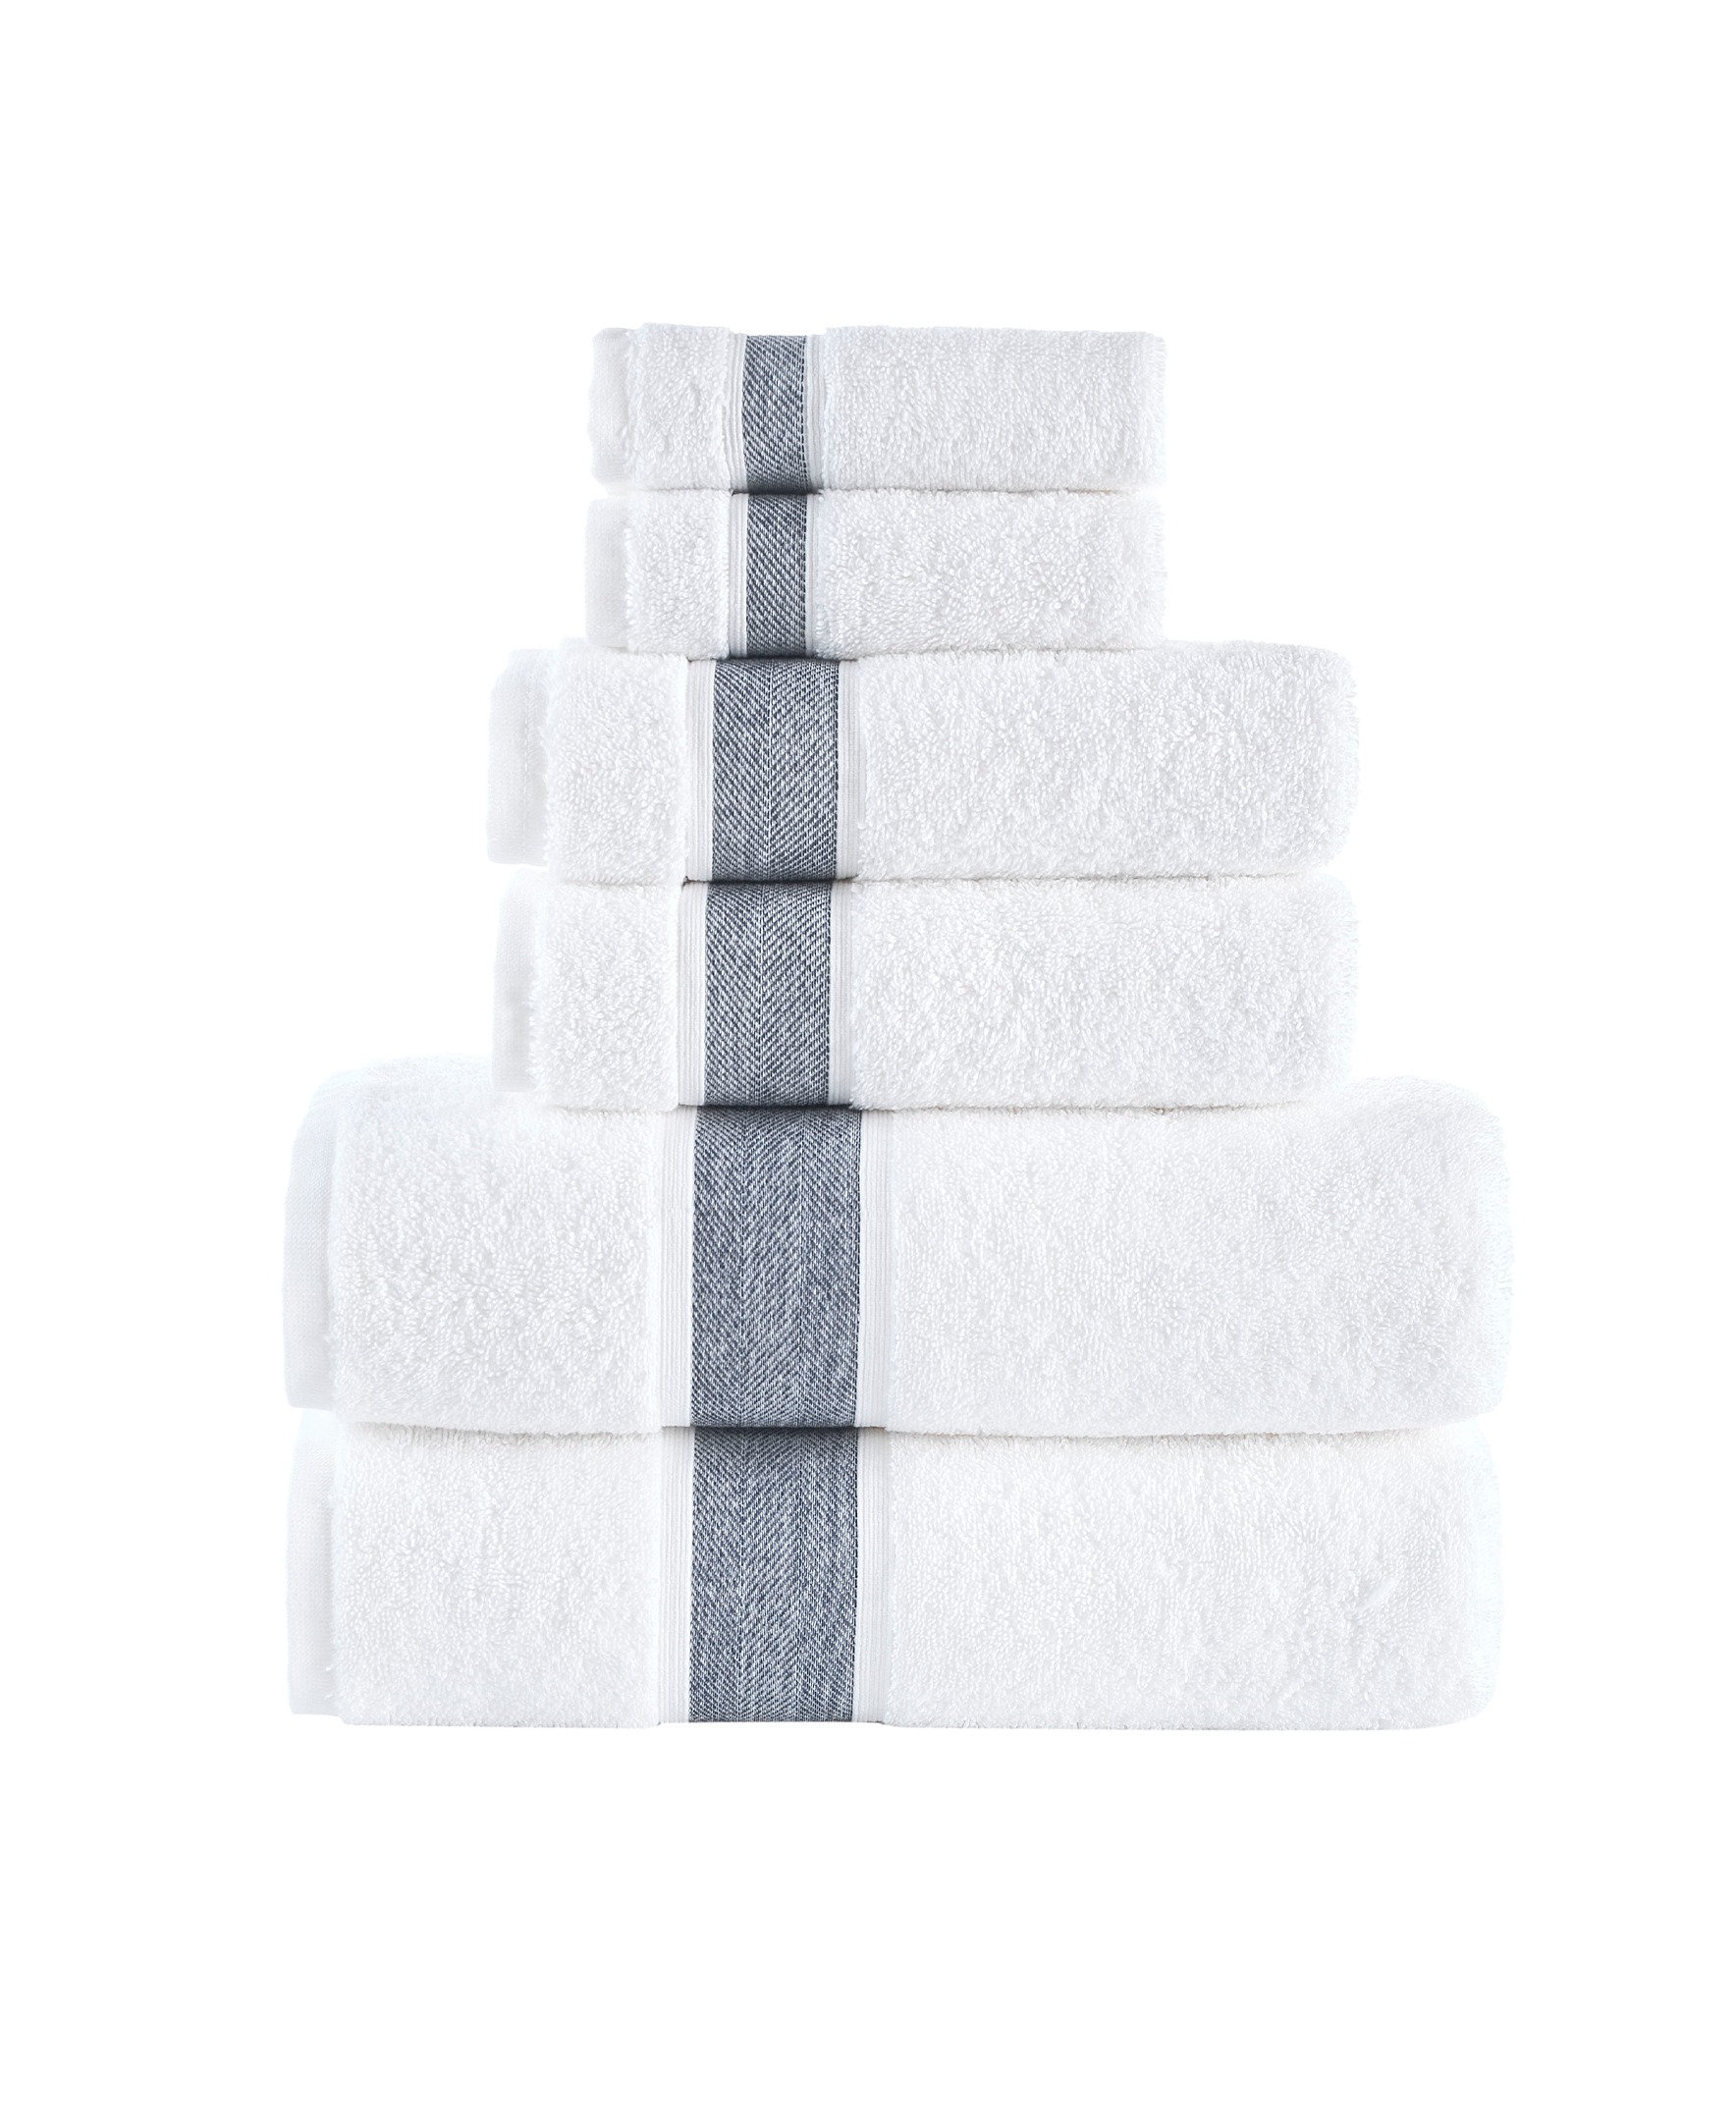 Karani Luxury Extra Soft 6 Piece 100% Turkish Cotton Bath Towel Set Darby Home Co Color: Rockridge Gray